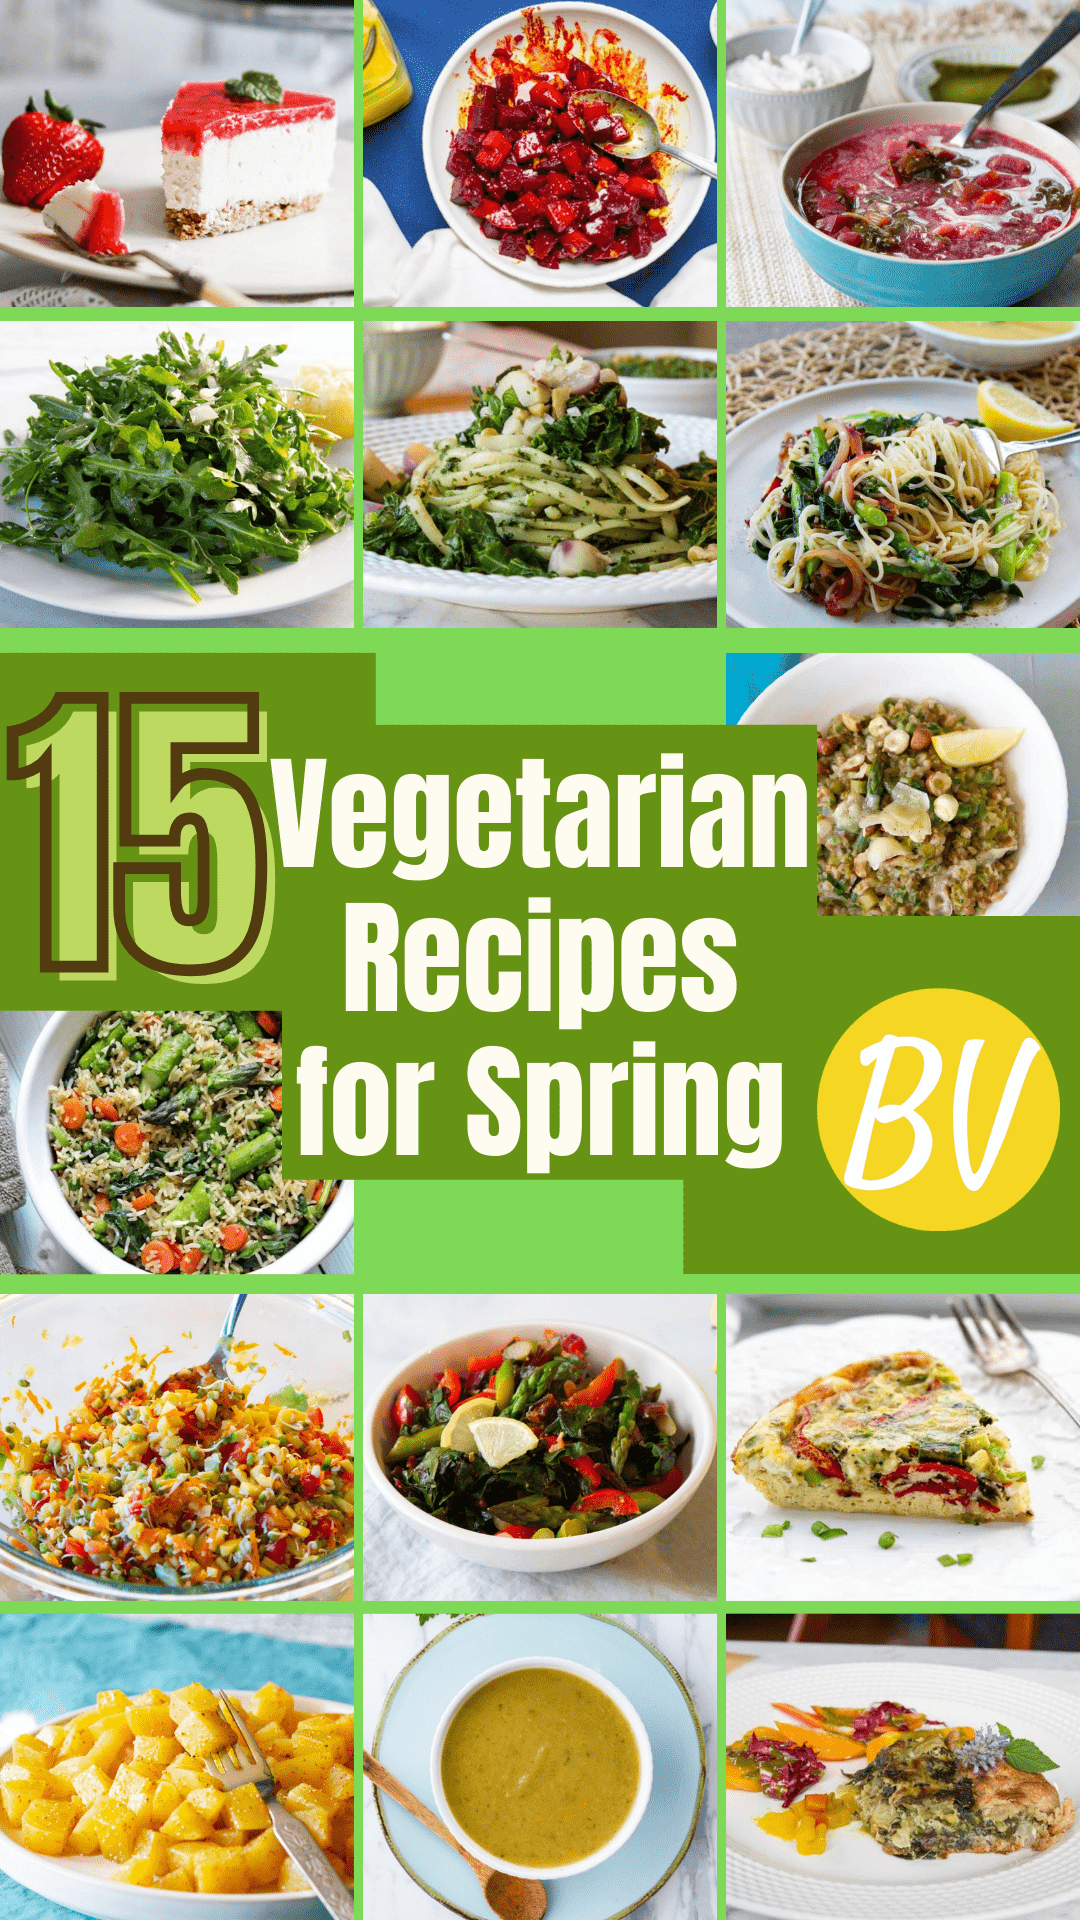 15 Vegetarian Recipes for Spring